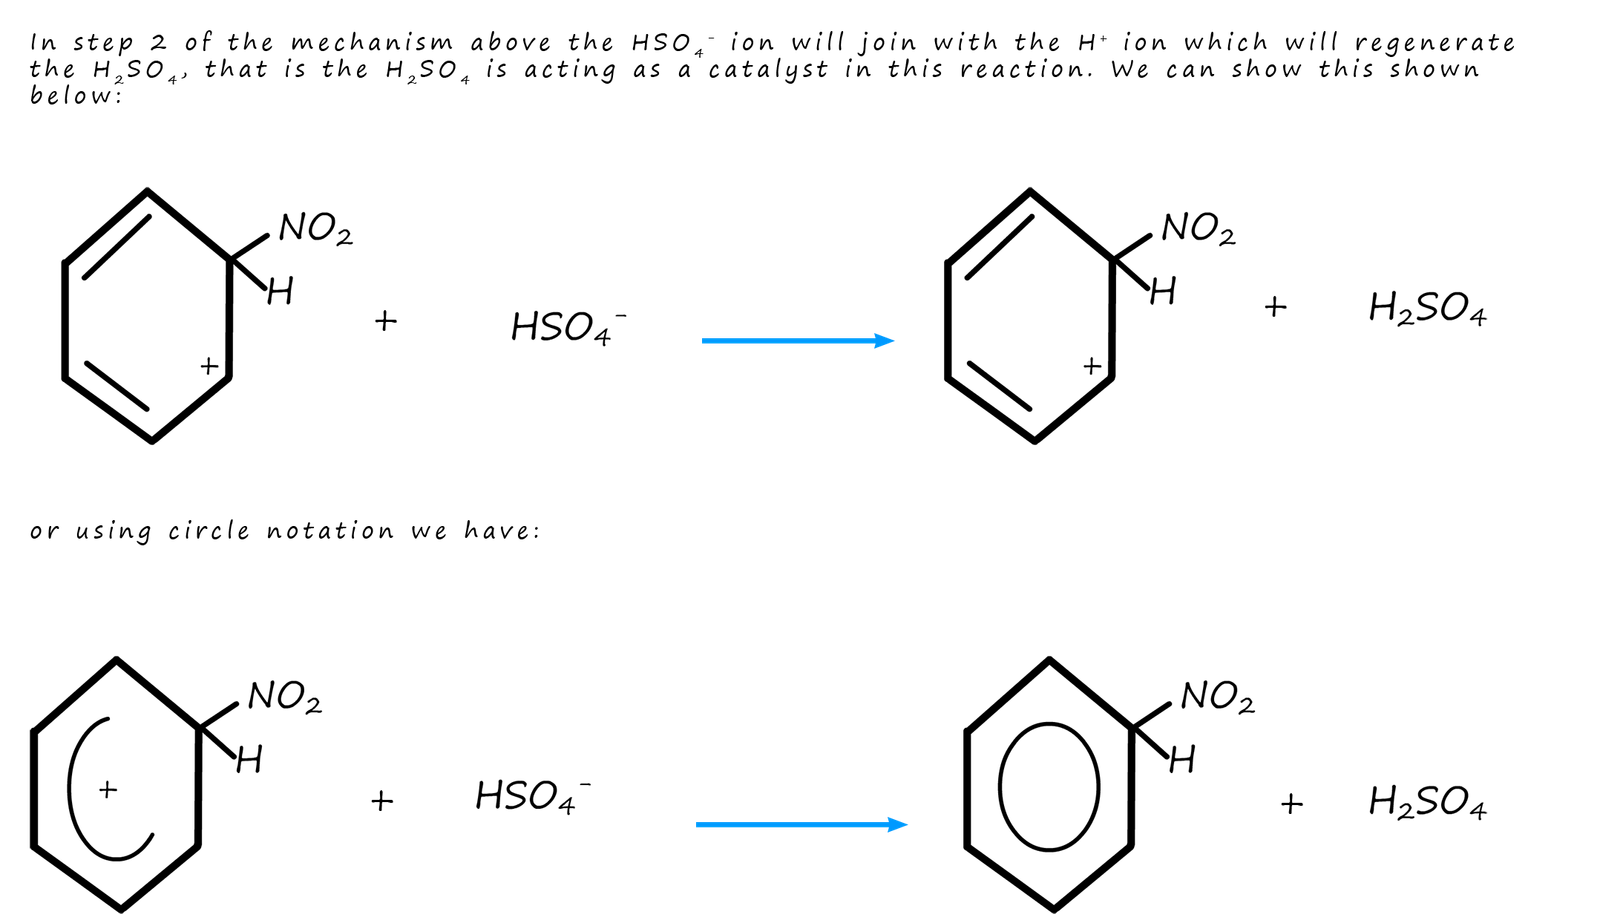 regeneration of sulfuric acid during nitration